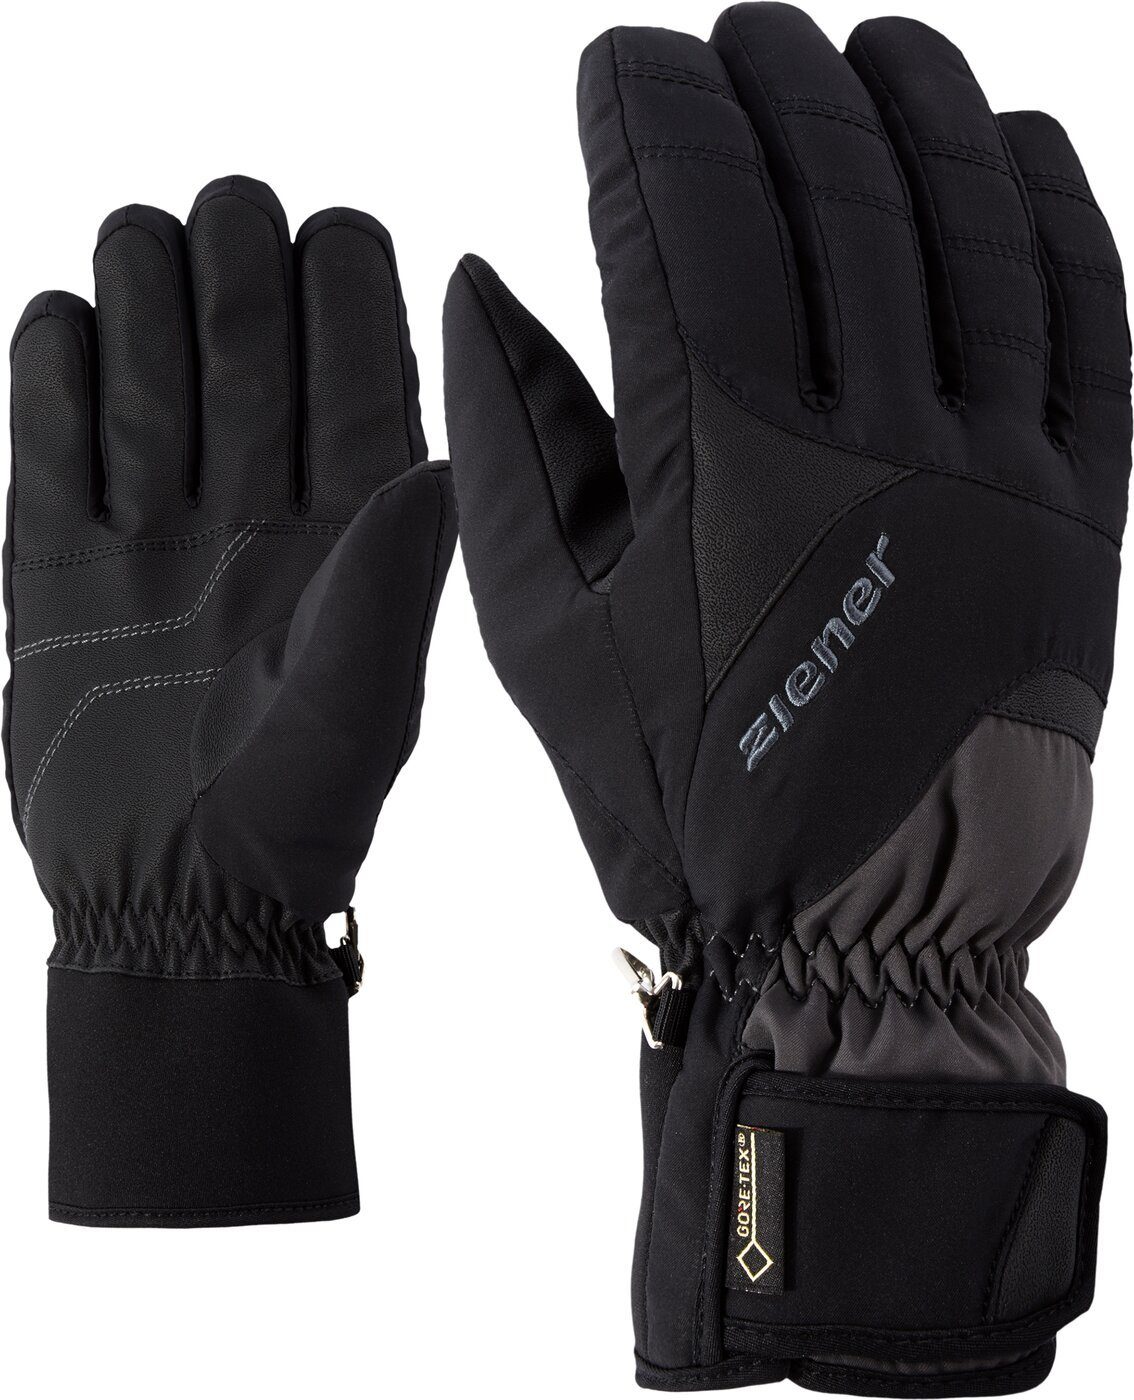 Ziener Fleecehandschuhe GUFFERT GTX glove 1512 graphite/black ski alpine